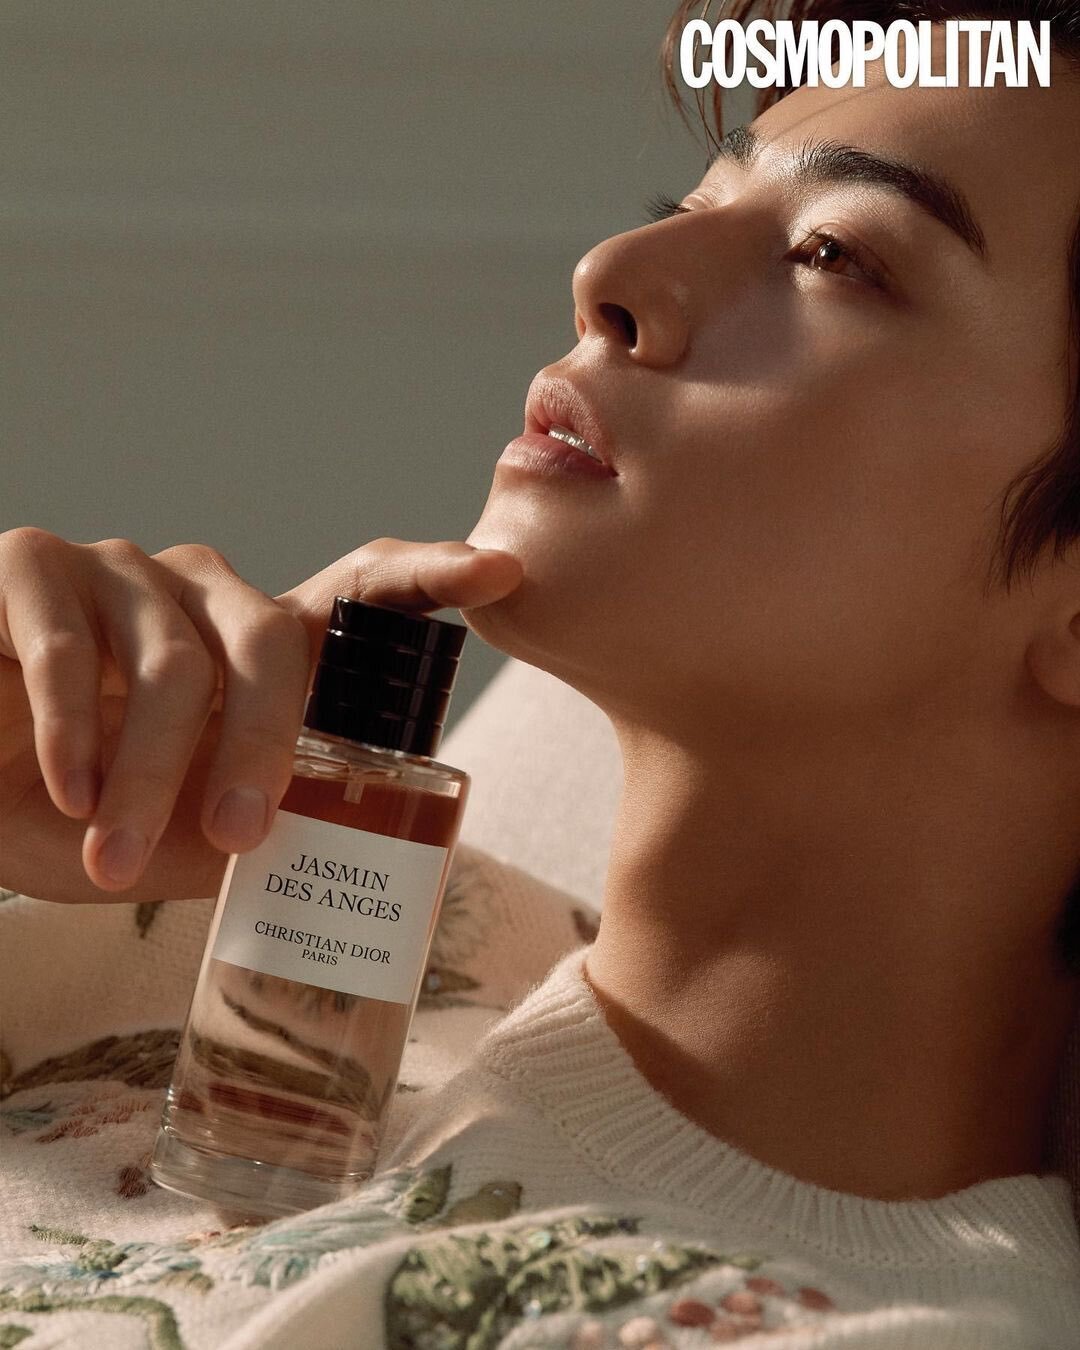 This is why Cha Eun Woo is Parfums Christian Dior global ambassador ✌